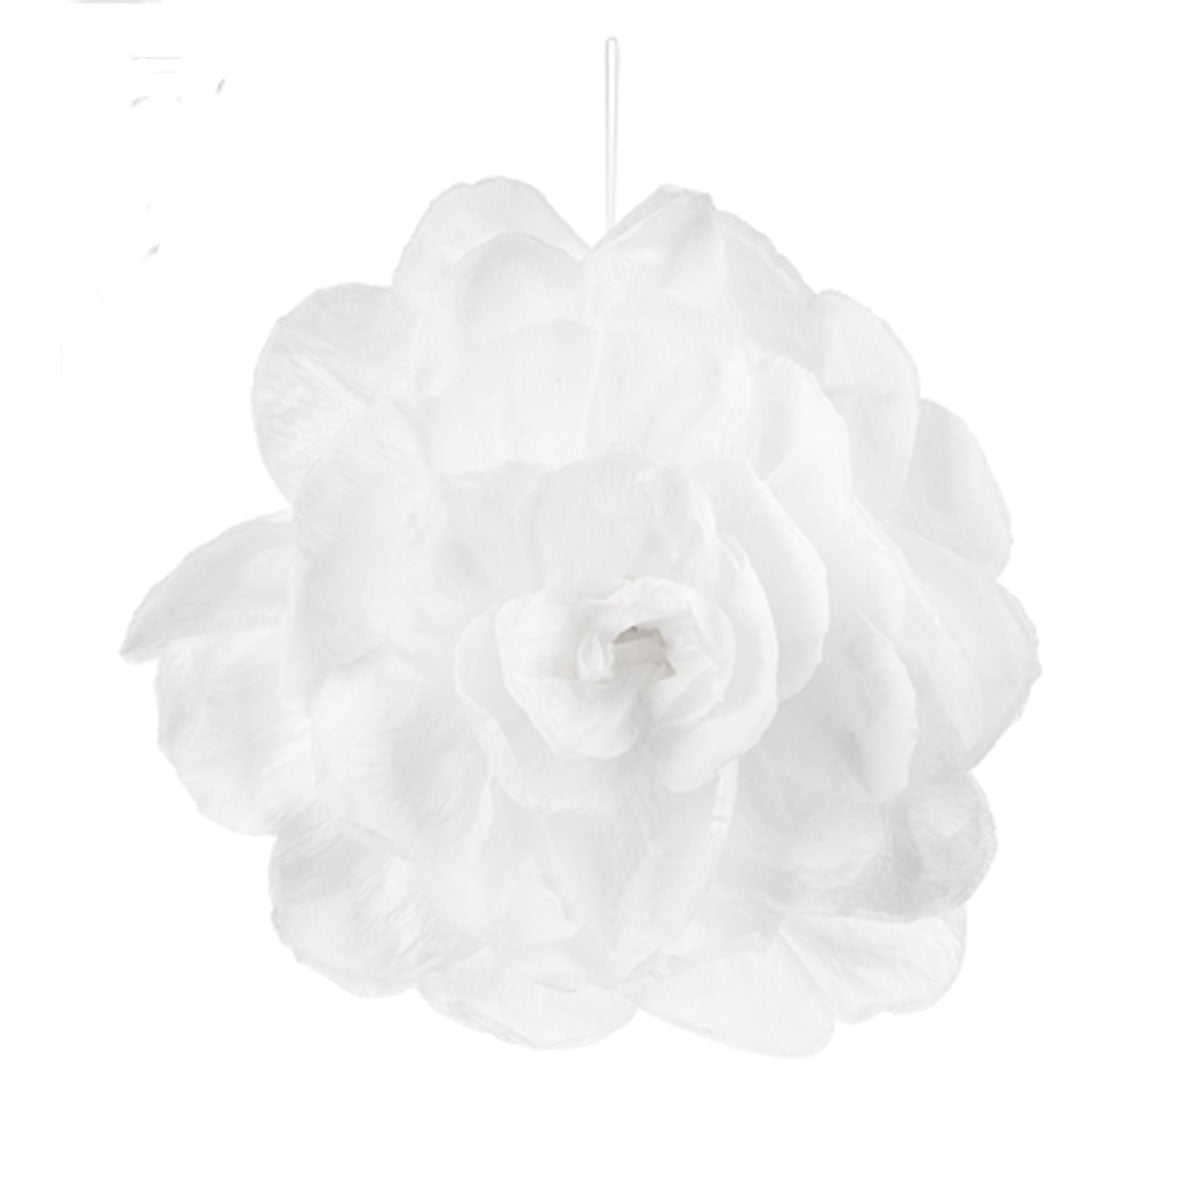 Textured White Flower Ornaments